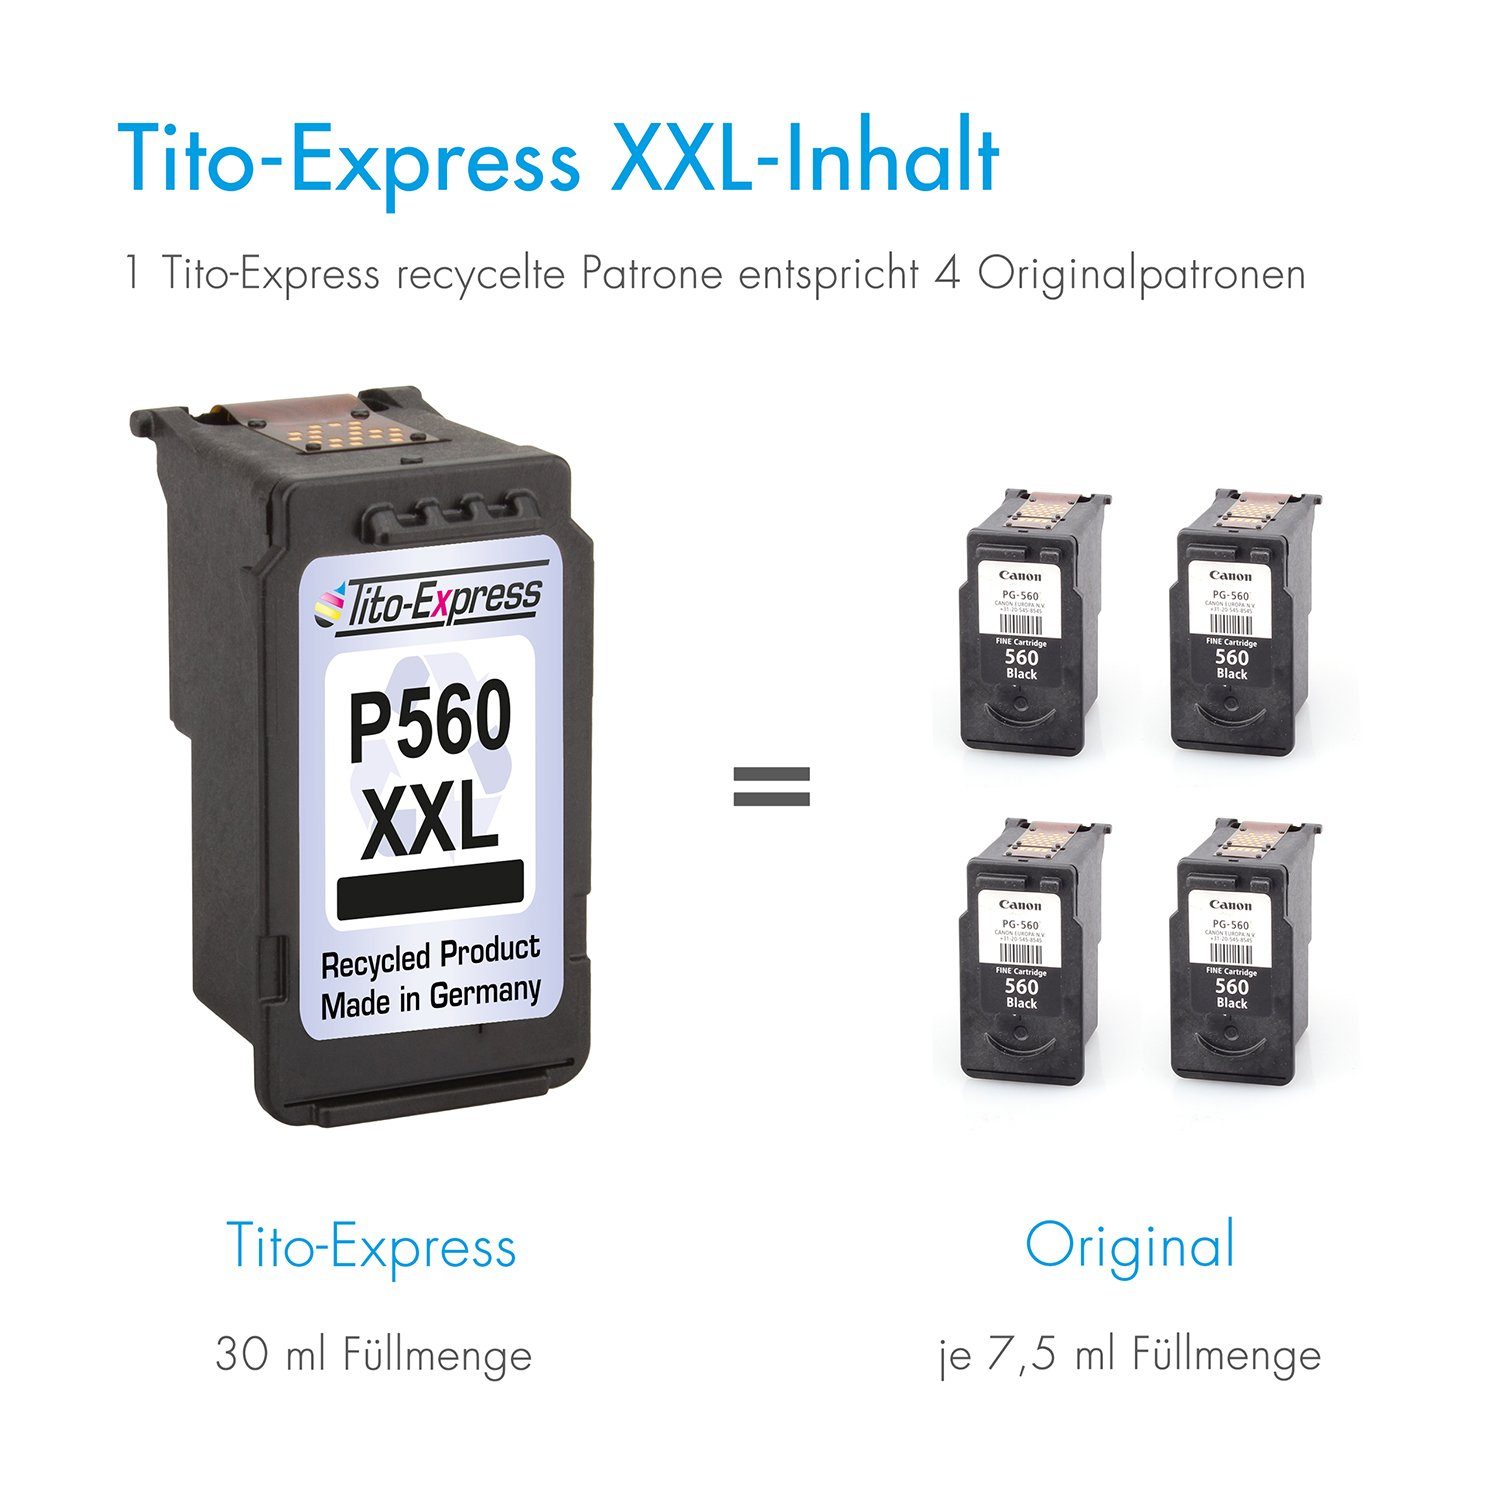 TS5352 Tintenpatrone CL-561 (für XL TS7450 Canon Canon Tito-Express PG-560 Black TS5351 TS-5351a XL PG560 ersetzt TS-5352a 560 TS7450 TS5353 PG TS-5353a)